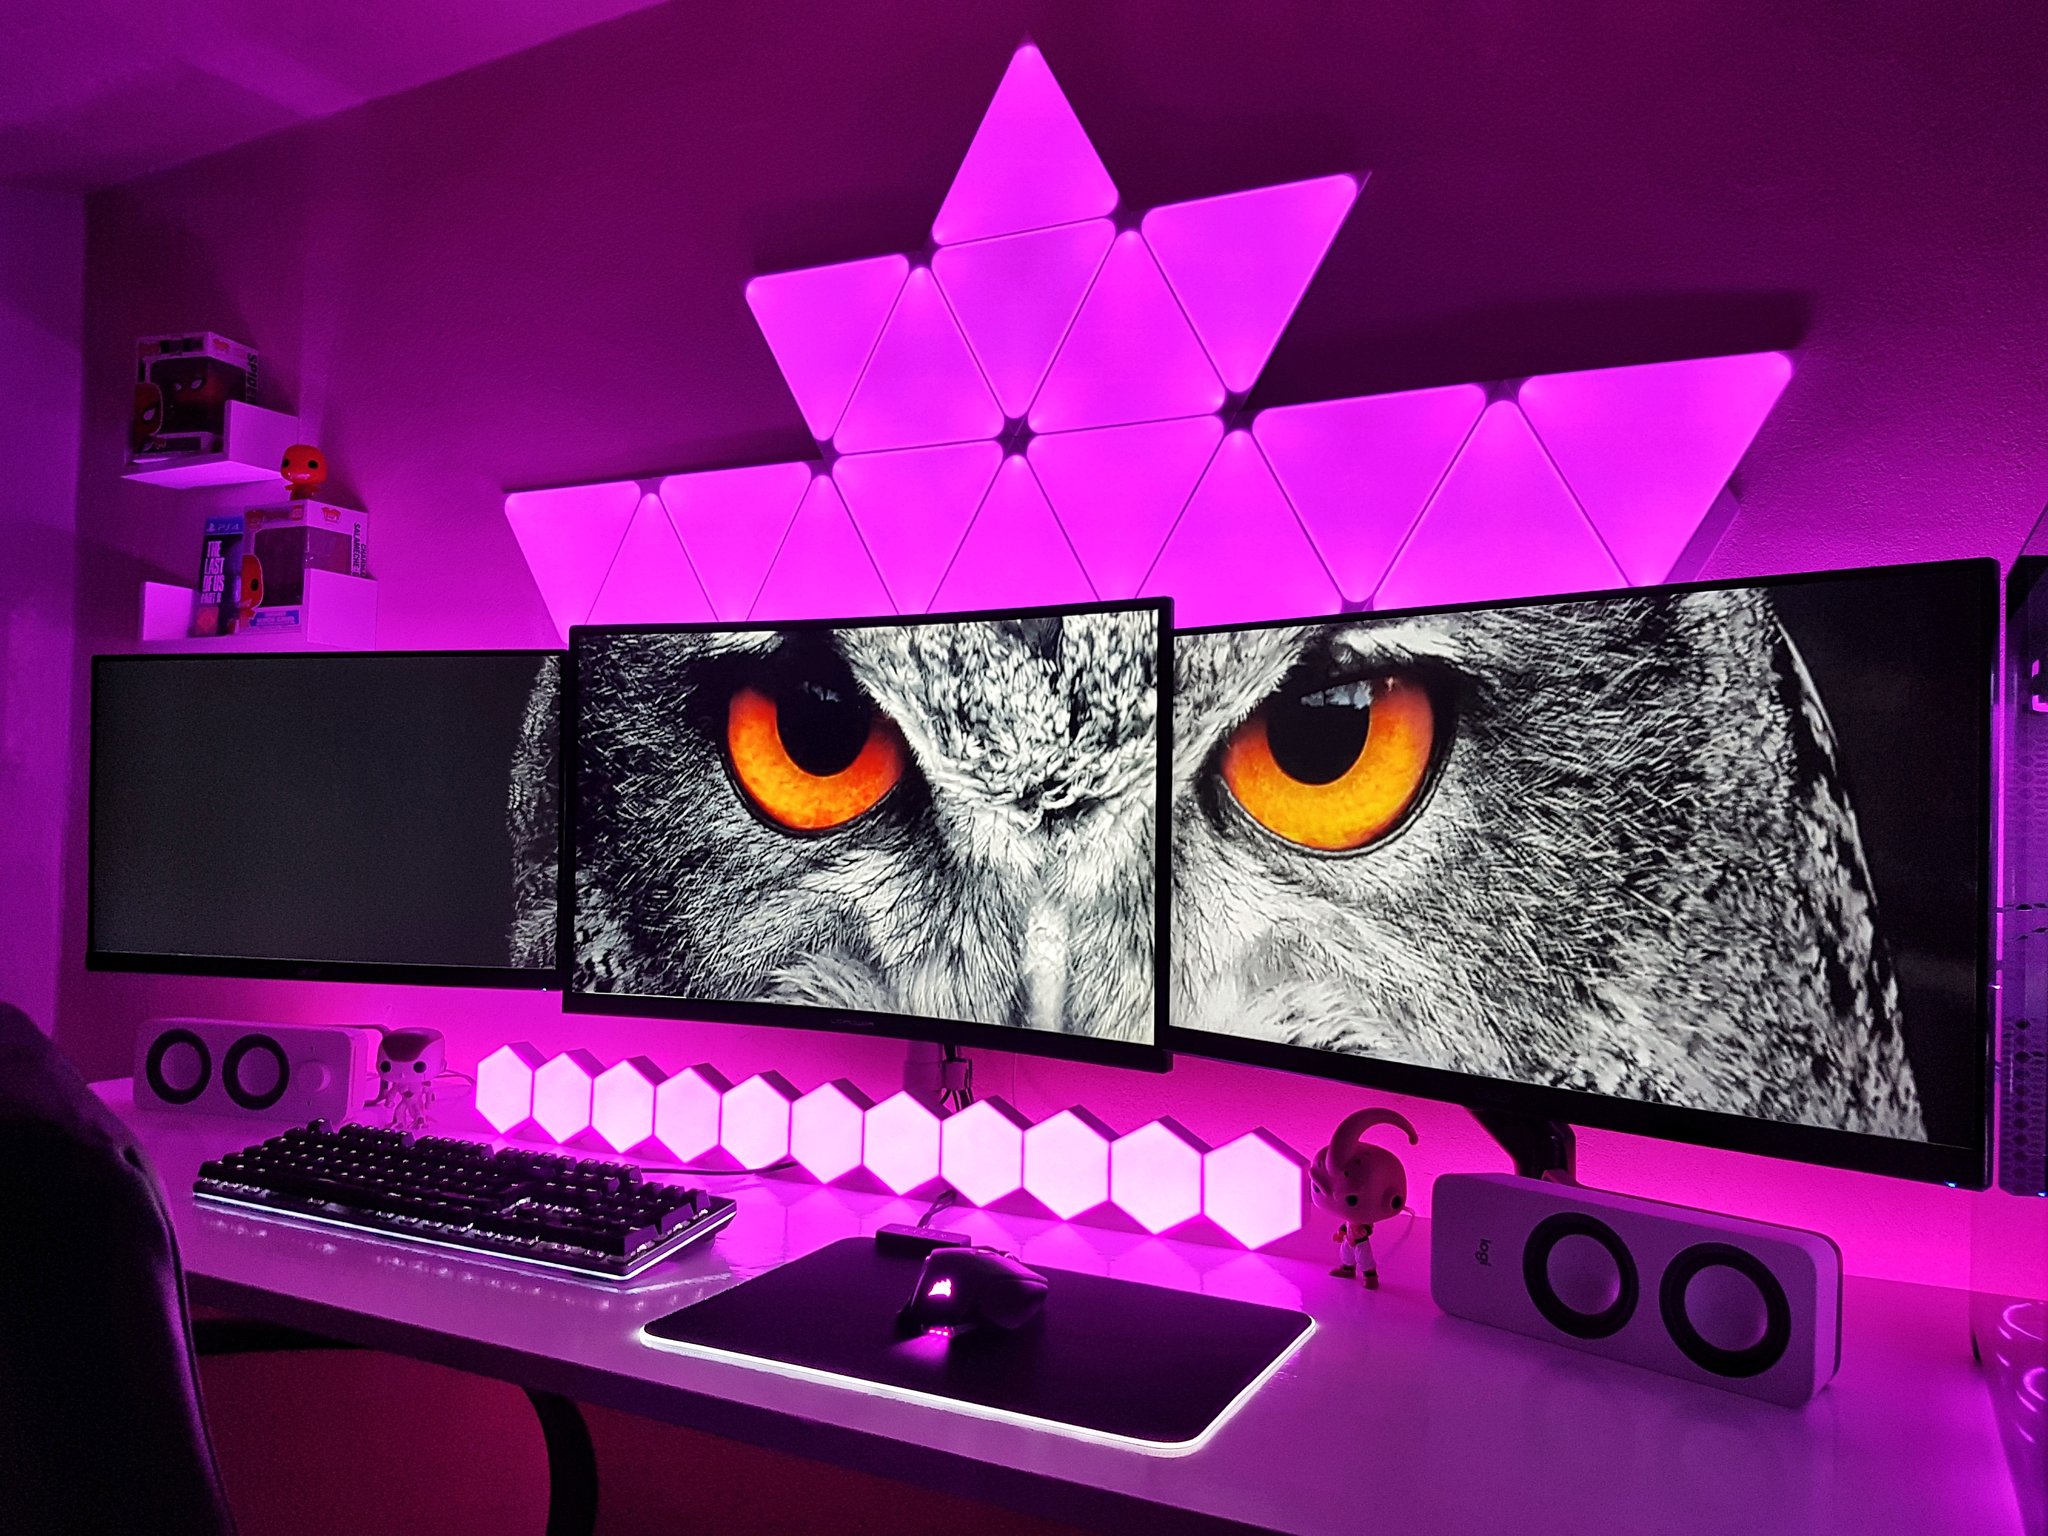 P_yeah_ on Twitter: "Pink Owl Setup #setup #gamingsetup #setups #rgb  #desksetup #pcsetup #pcgamer #owl #nature #tech #Pink #love #like  #followers #goodlife #lifestyle #nanoleaf #cololight #gamer #games #gaming  #news #gamerlife #gamingsetups #funko #clean #